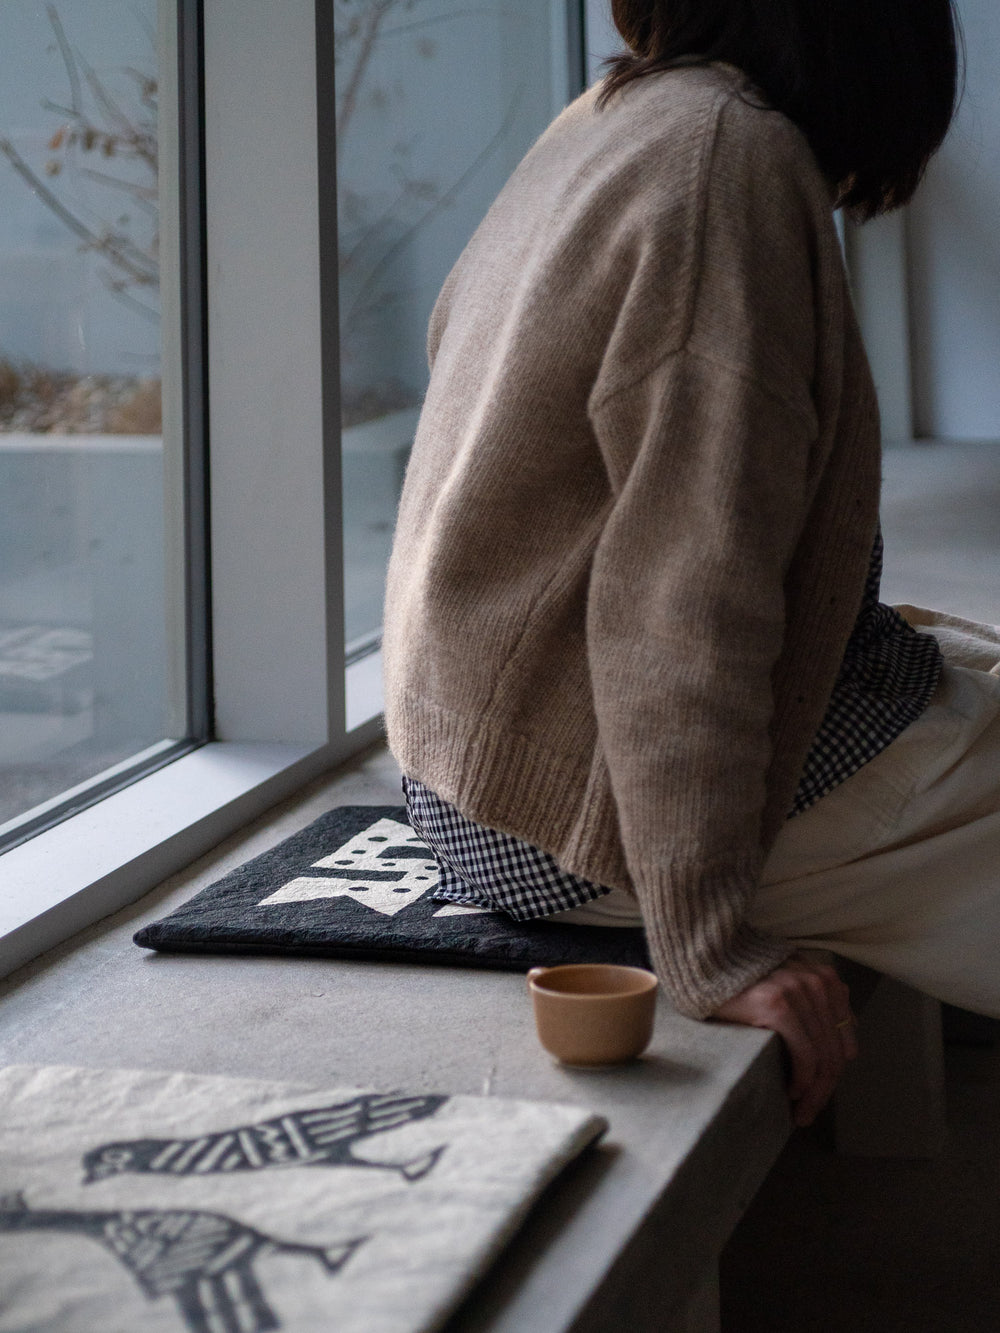 Washi Kakuza Paper Cushion – Design 2 Blue